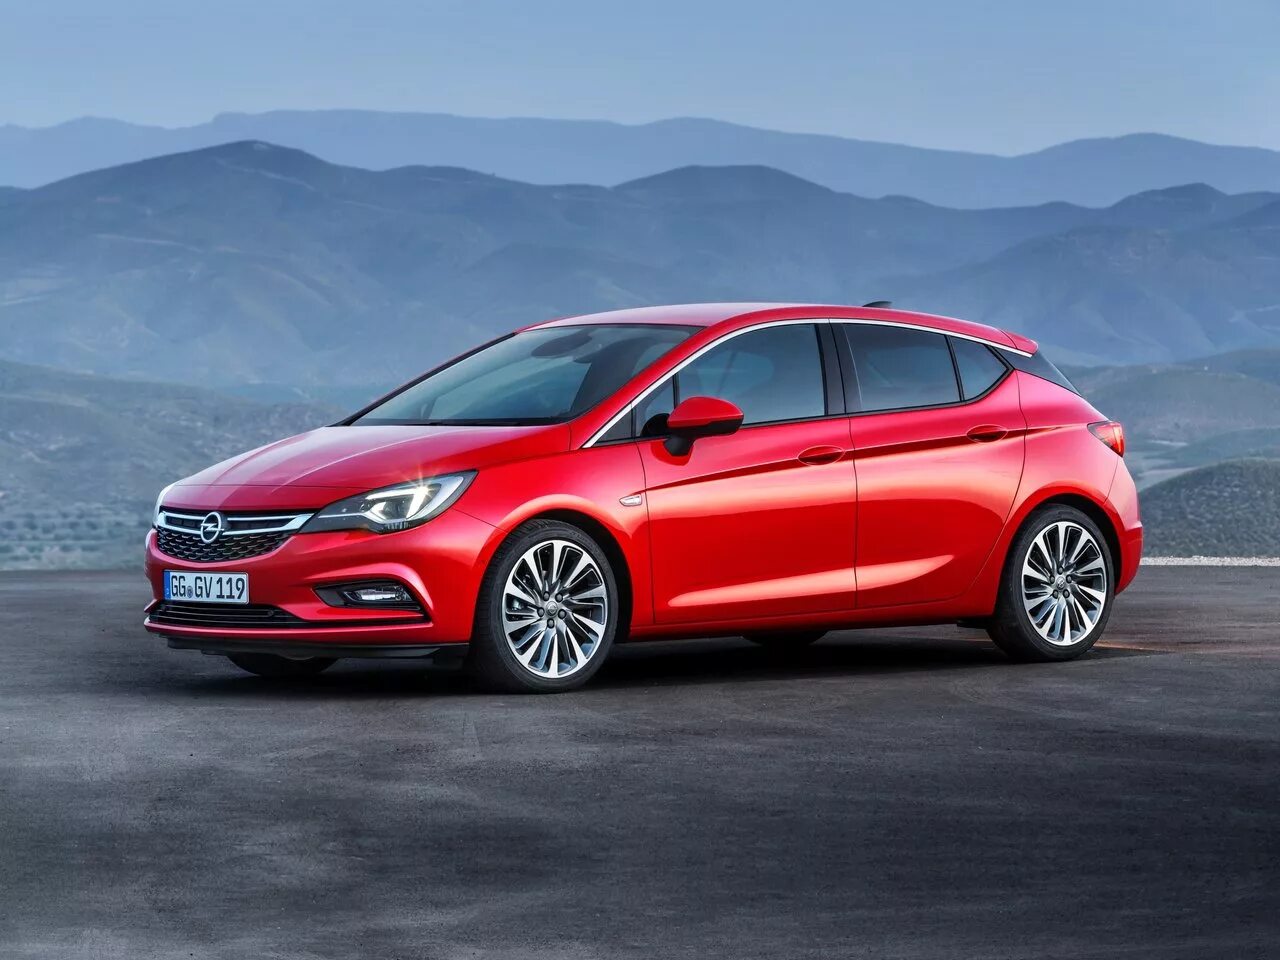 1 06 2017. Opel Astra k 2017. Opel Astra k 2015. Opel Astra k 2016. Opel Astra 2016 хэтчбек.